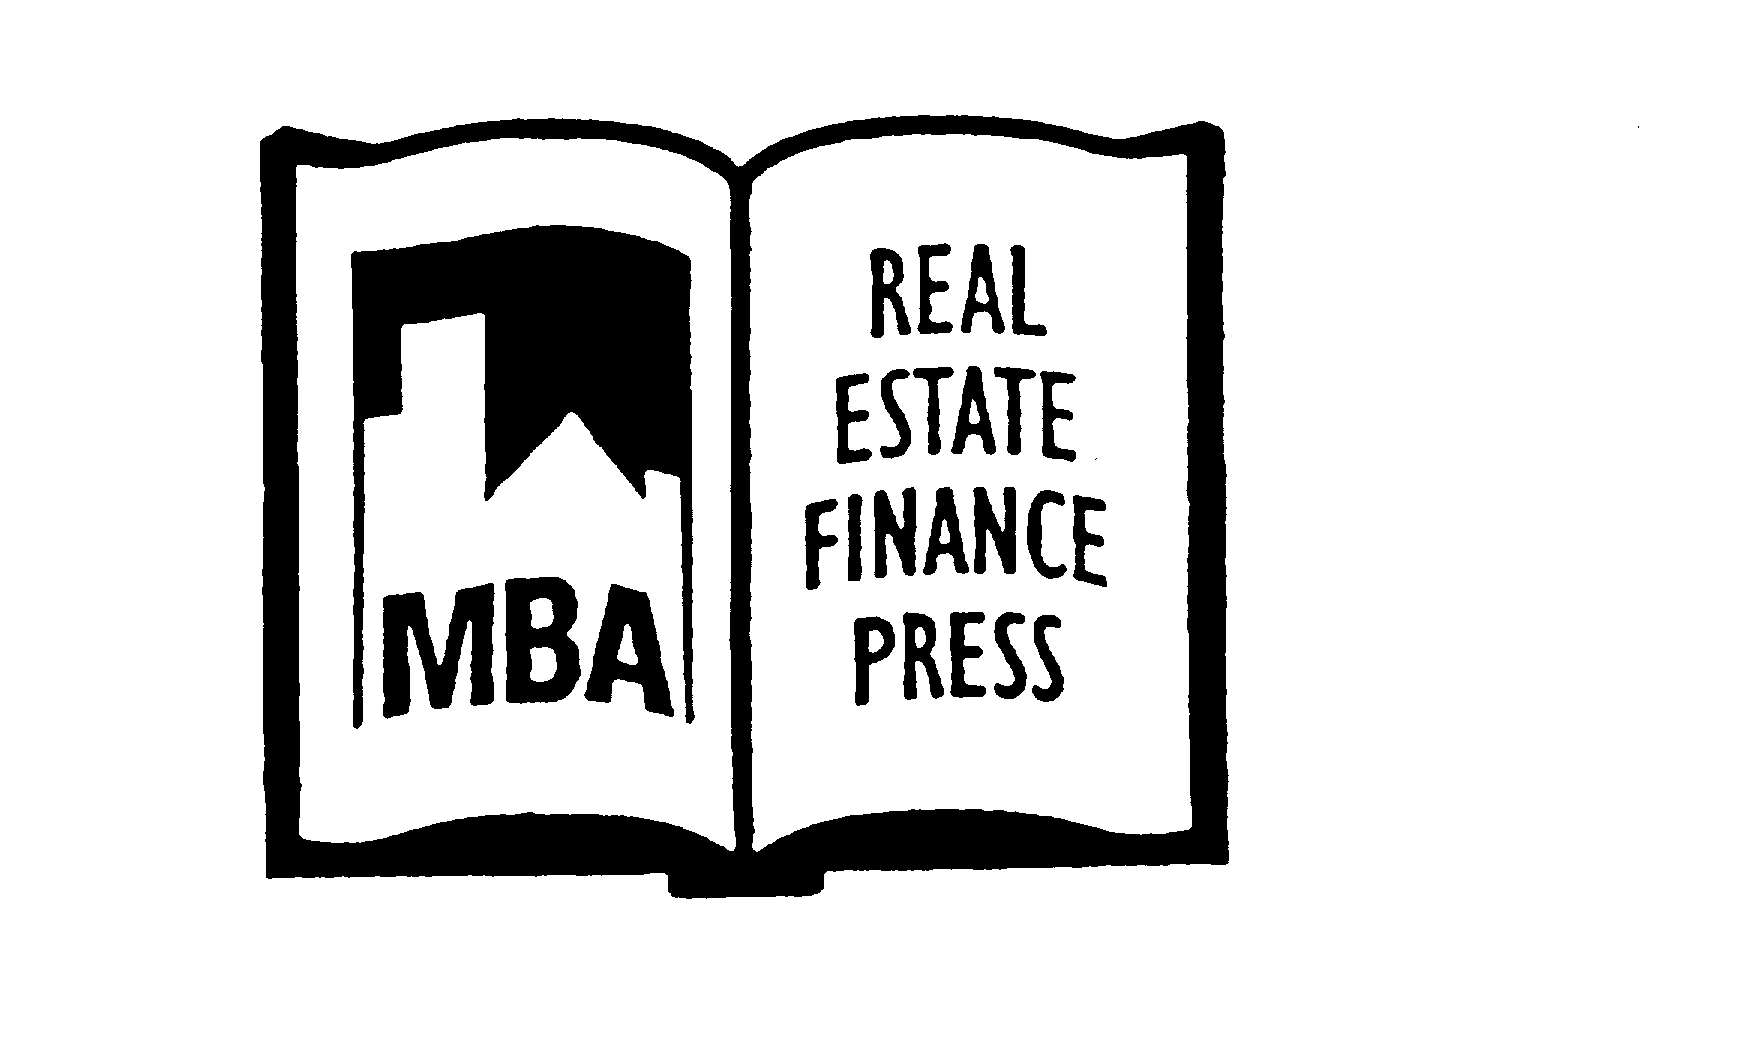  MBA REAL ESTATE FINANCE PRESS